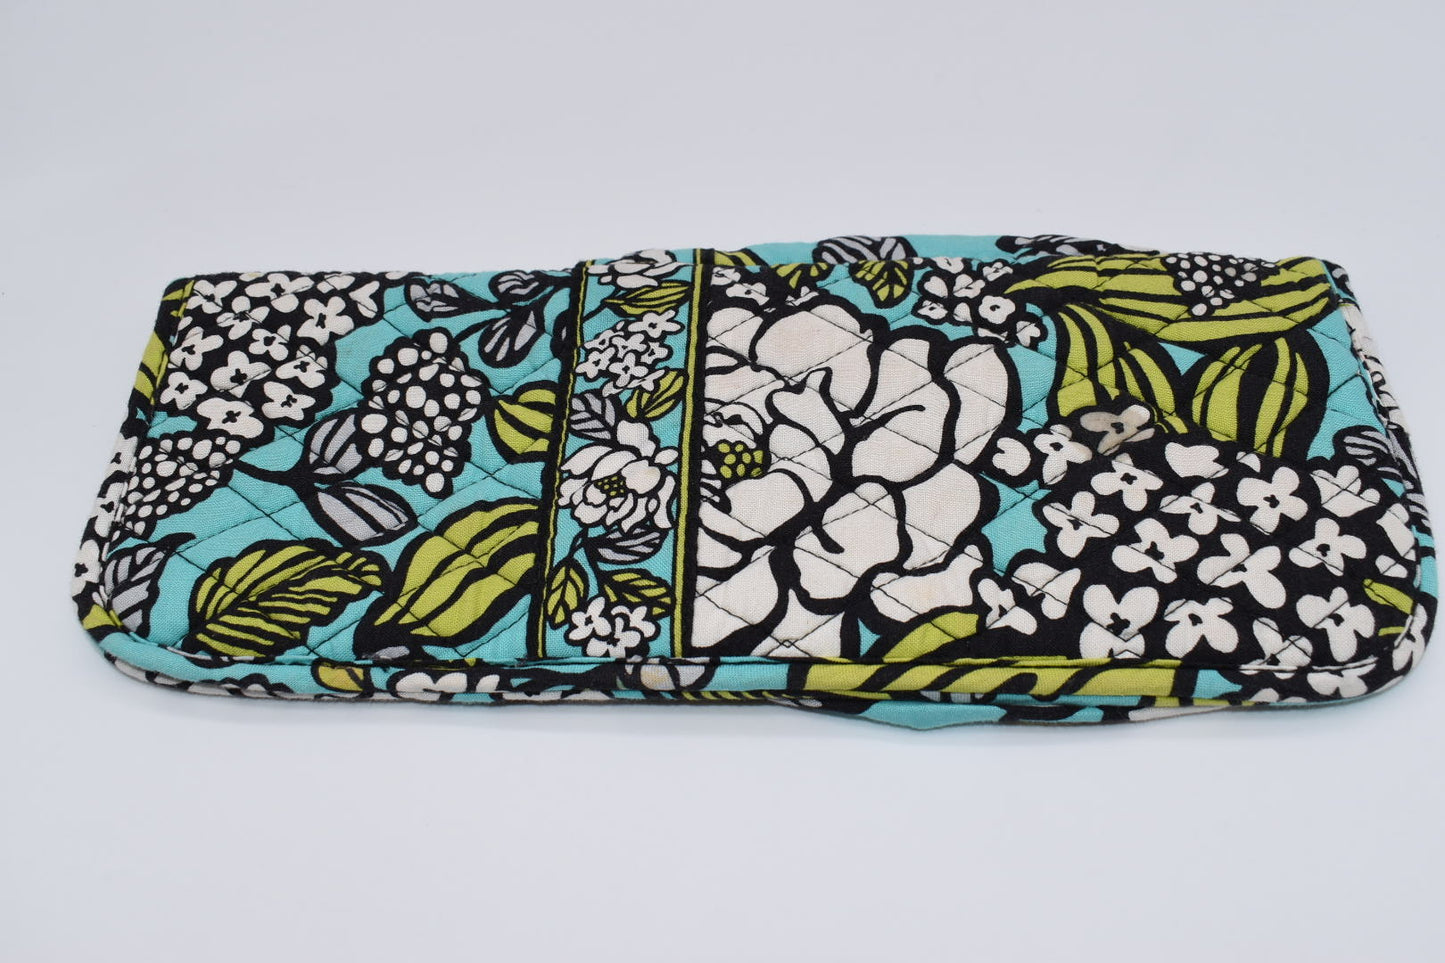 Vera Bradley Curling & Flat Iron Cover in "Island Blooms" Pattern